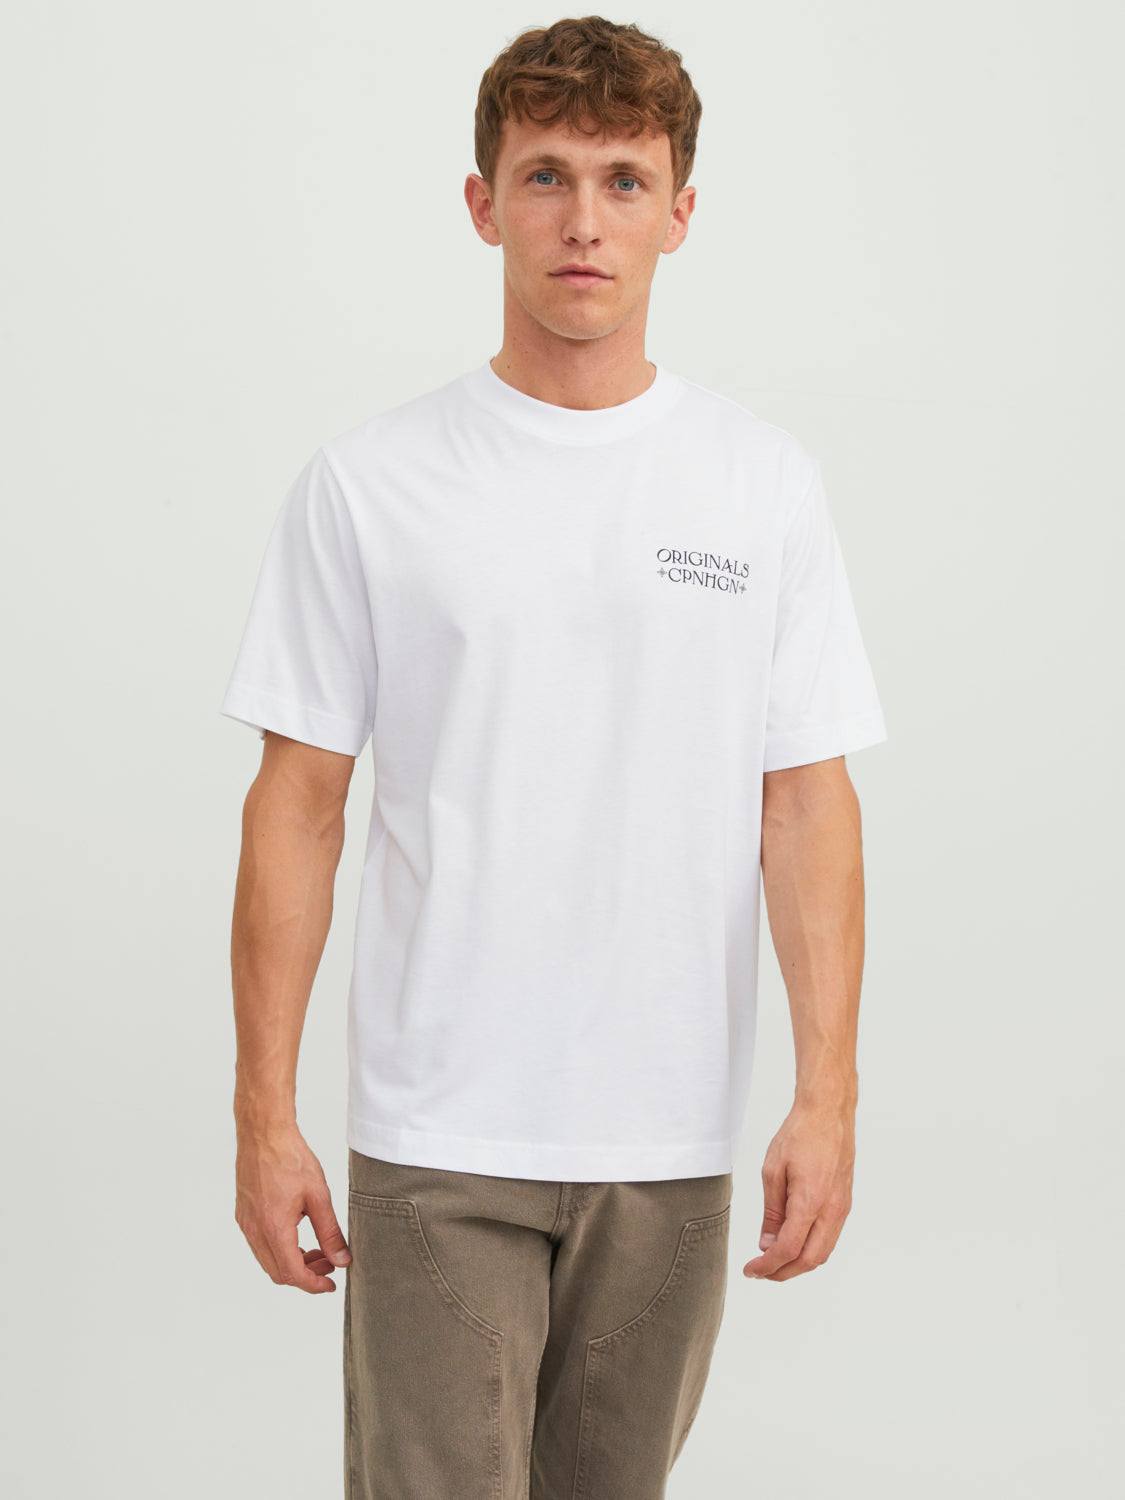 Camiseta estampado espalda blanco - JORGRACIA